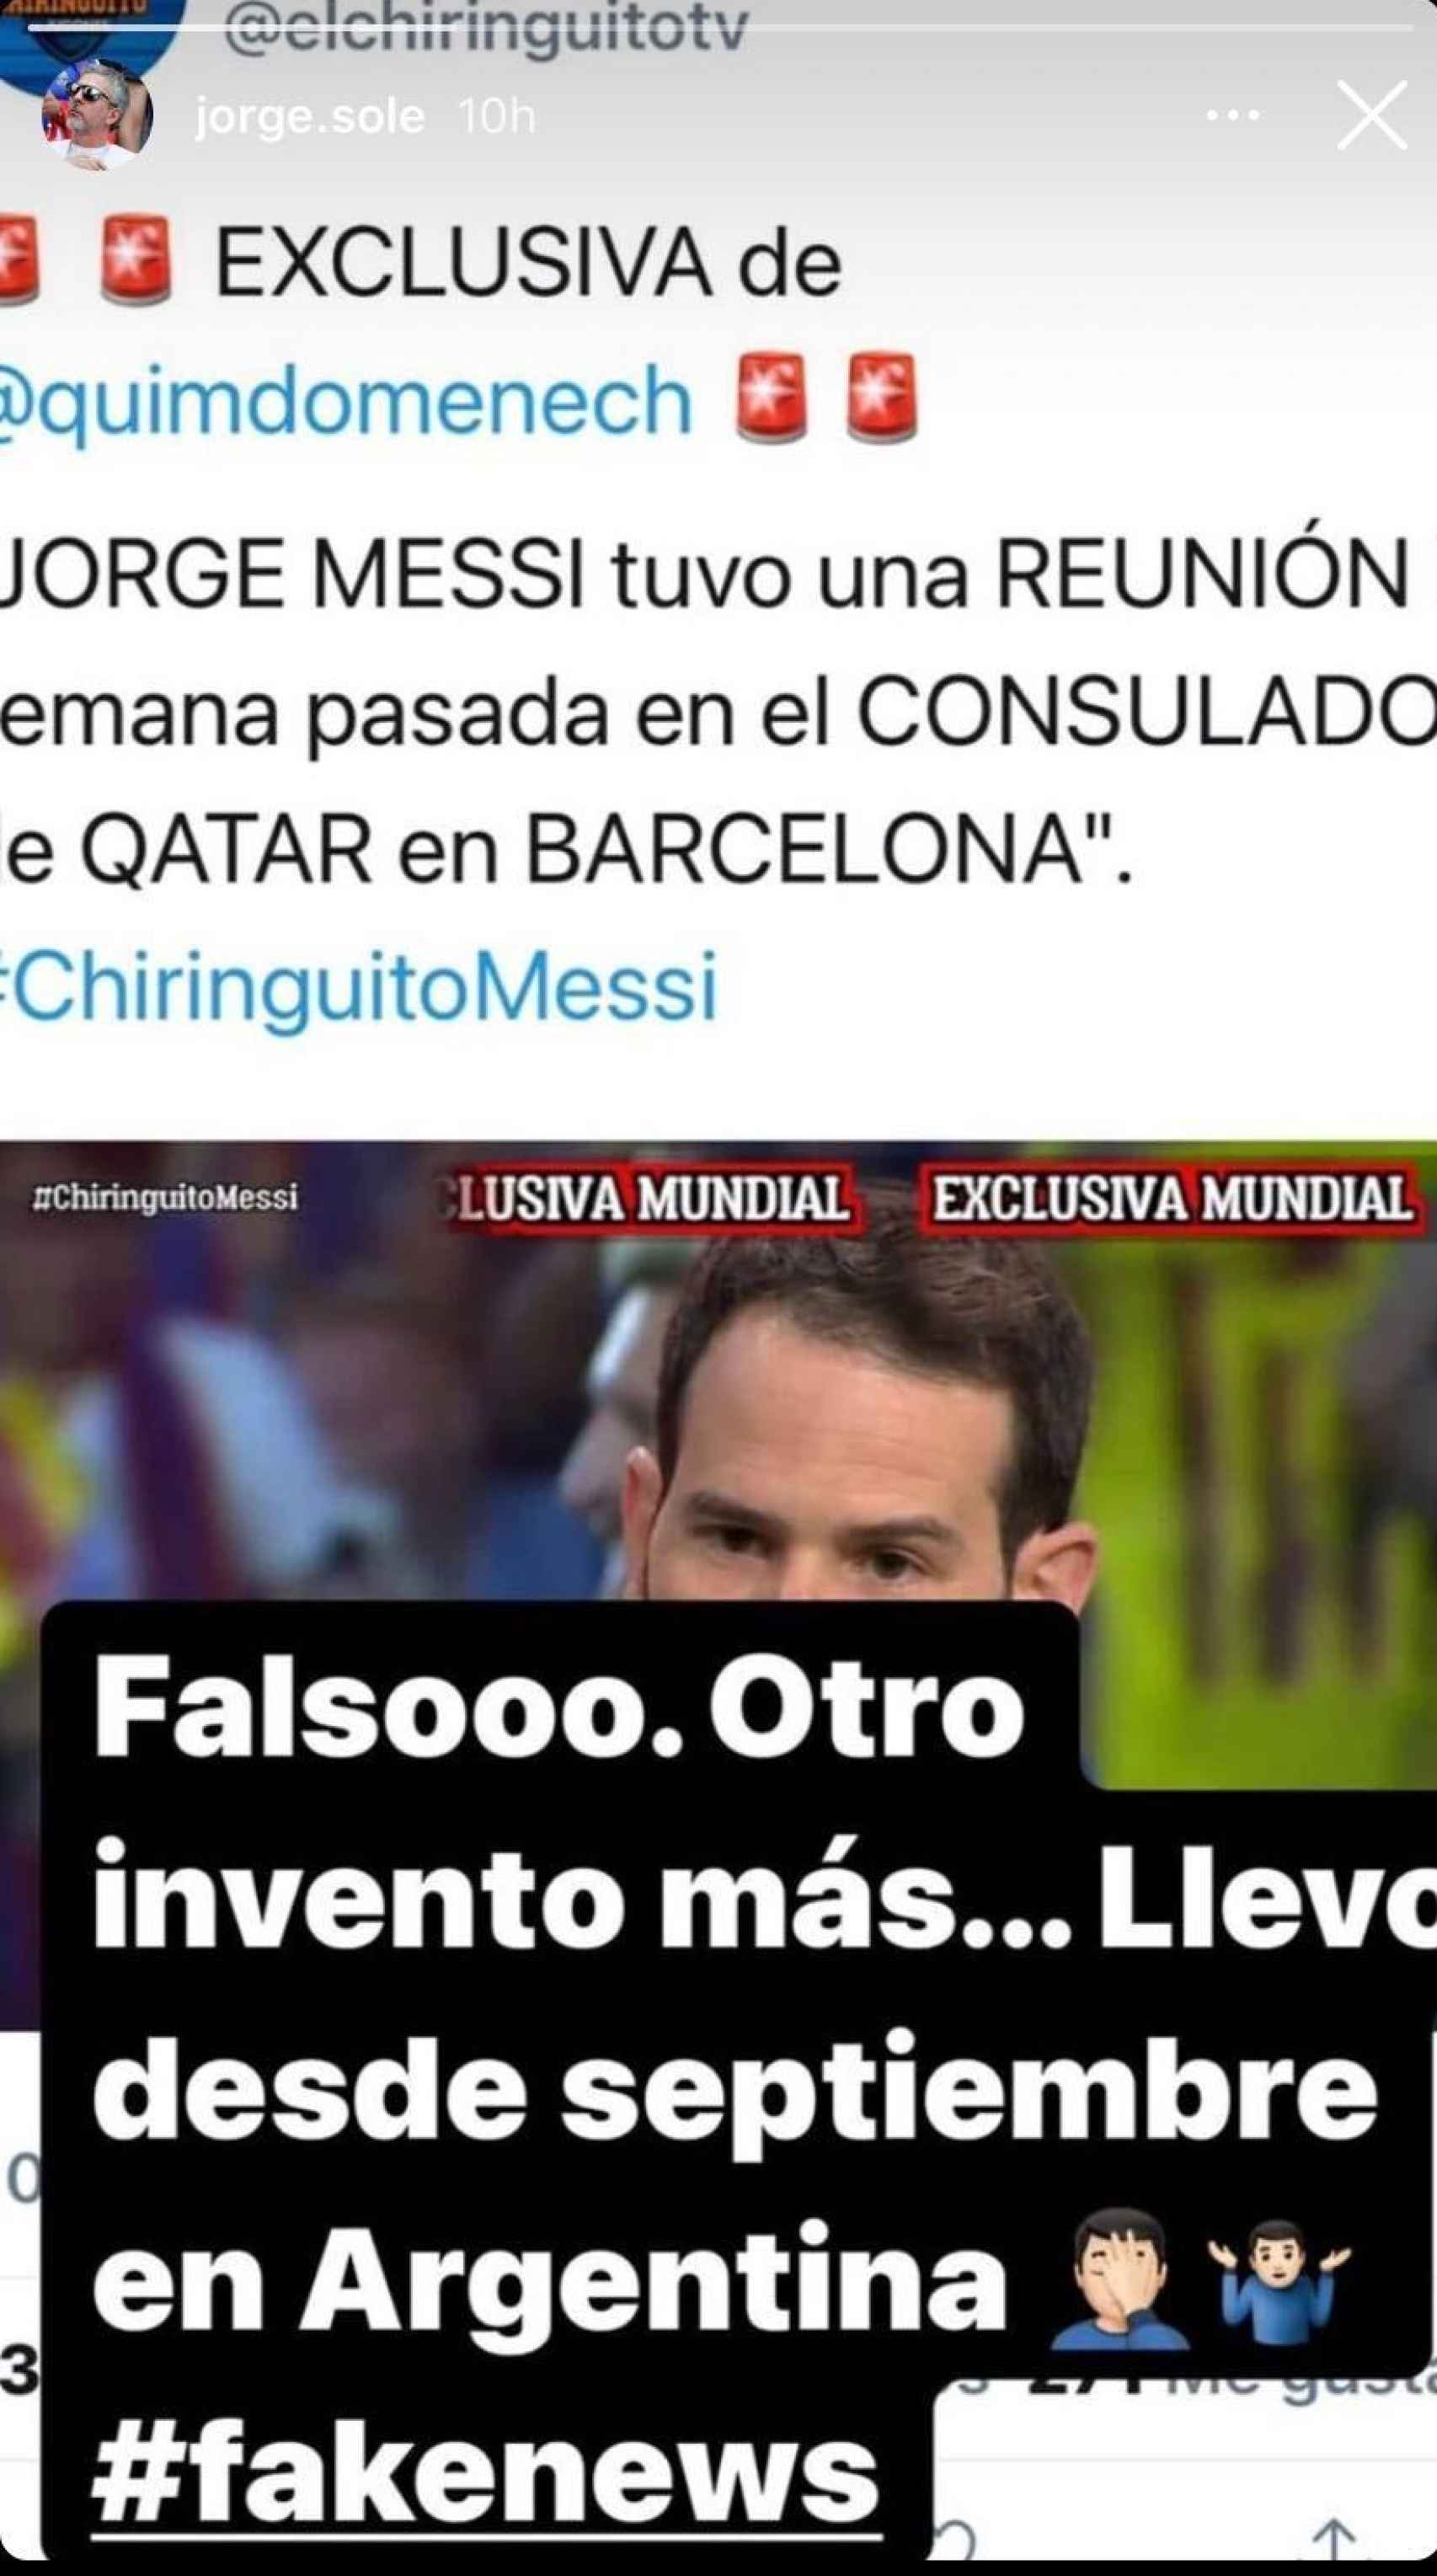 El mensaje de Jorge Messi en Instagram